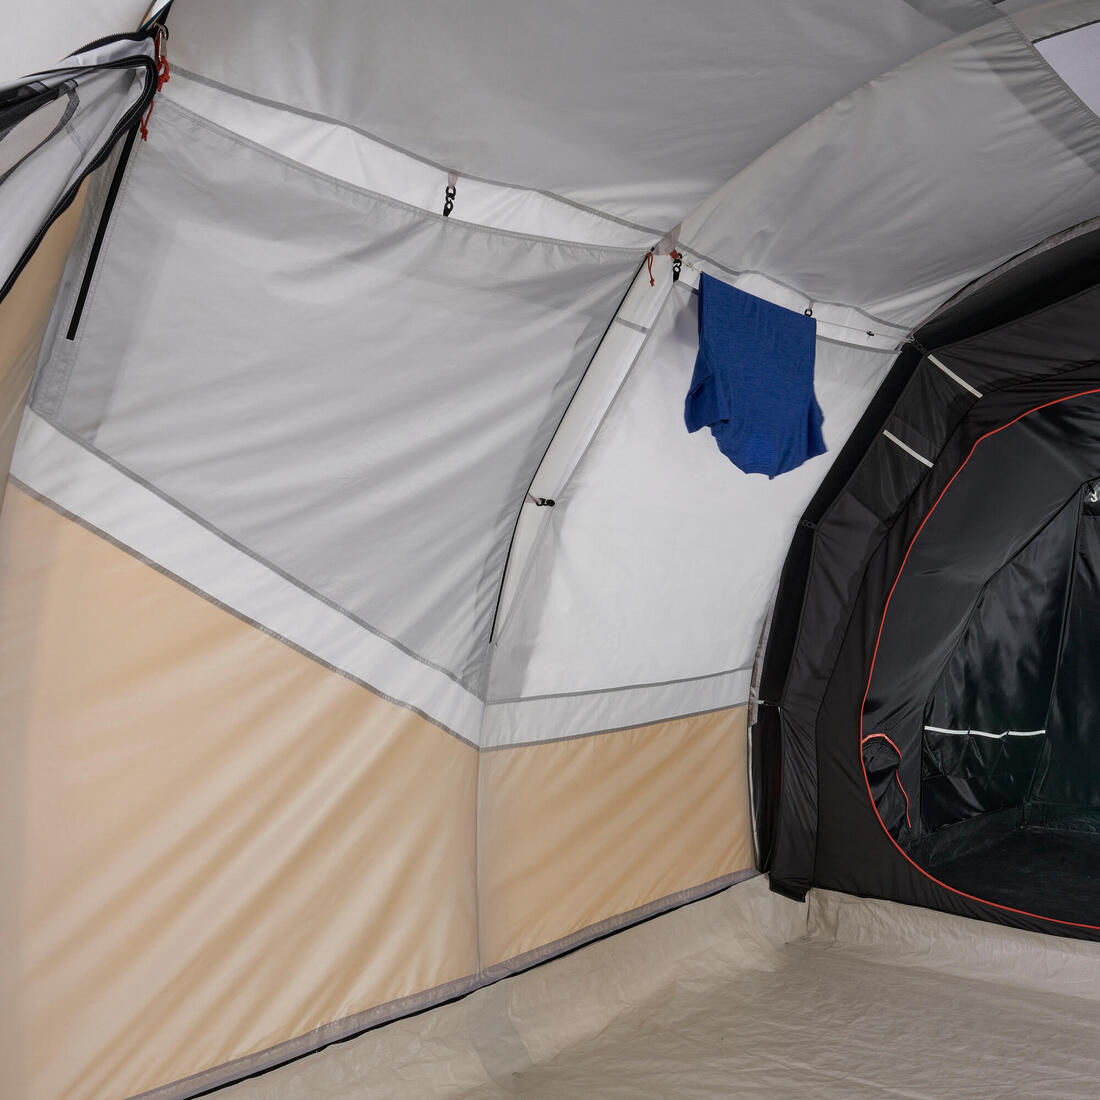 QUECHUA (ケシュア) キャンプ・ハイキング インフレータブル テント 3ルーム AIR SECONDS 6.3 FB 6人用